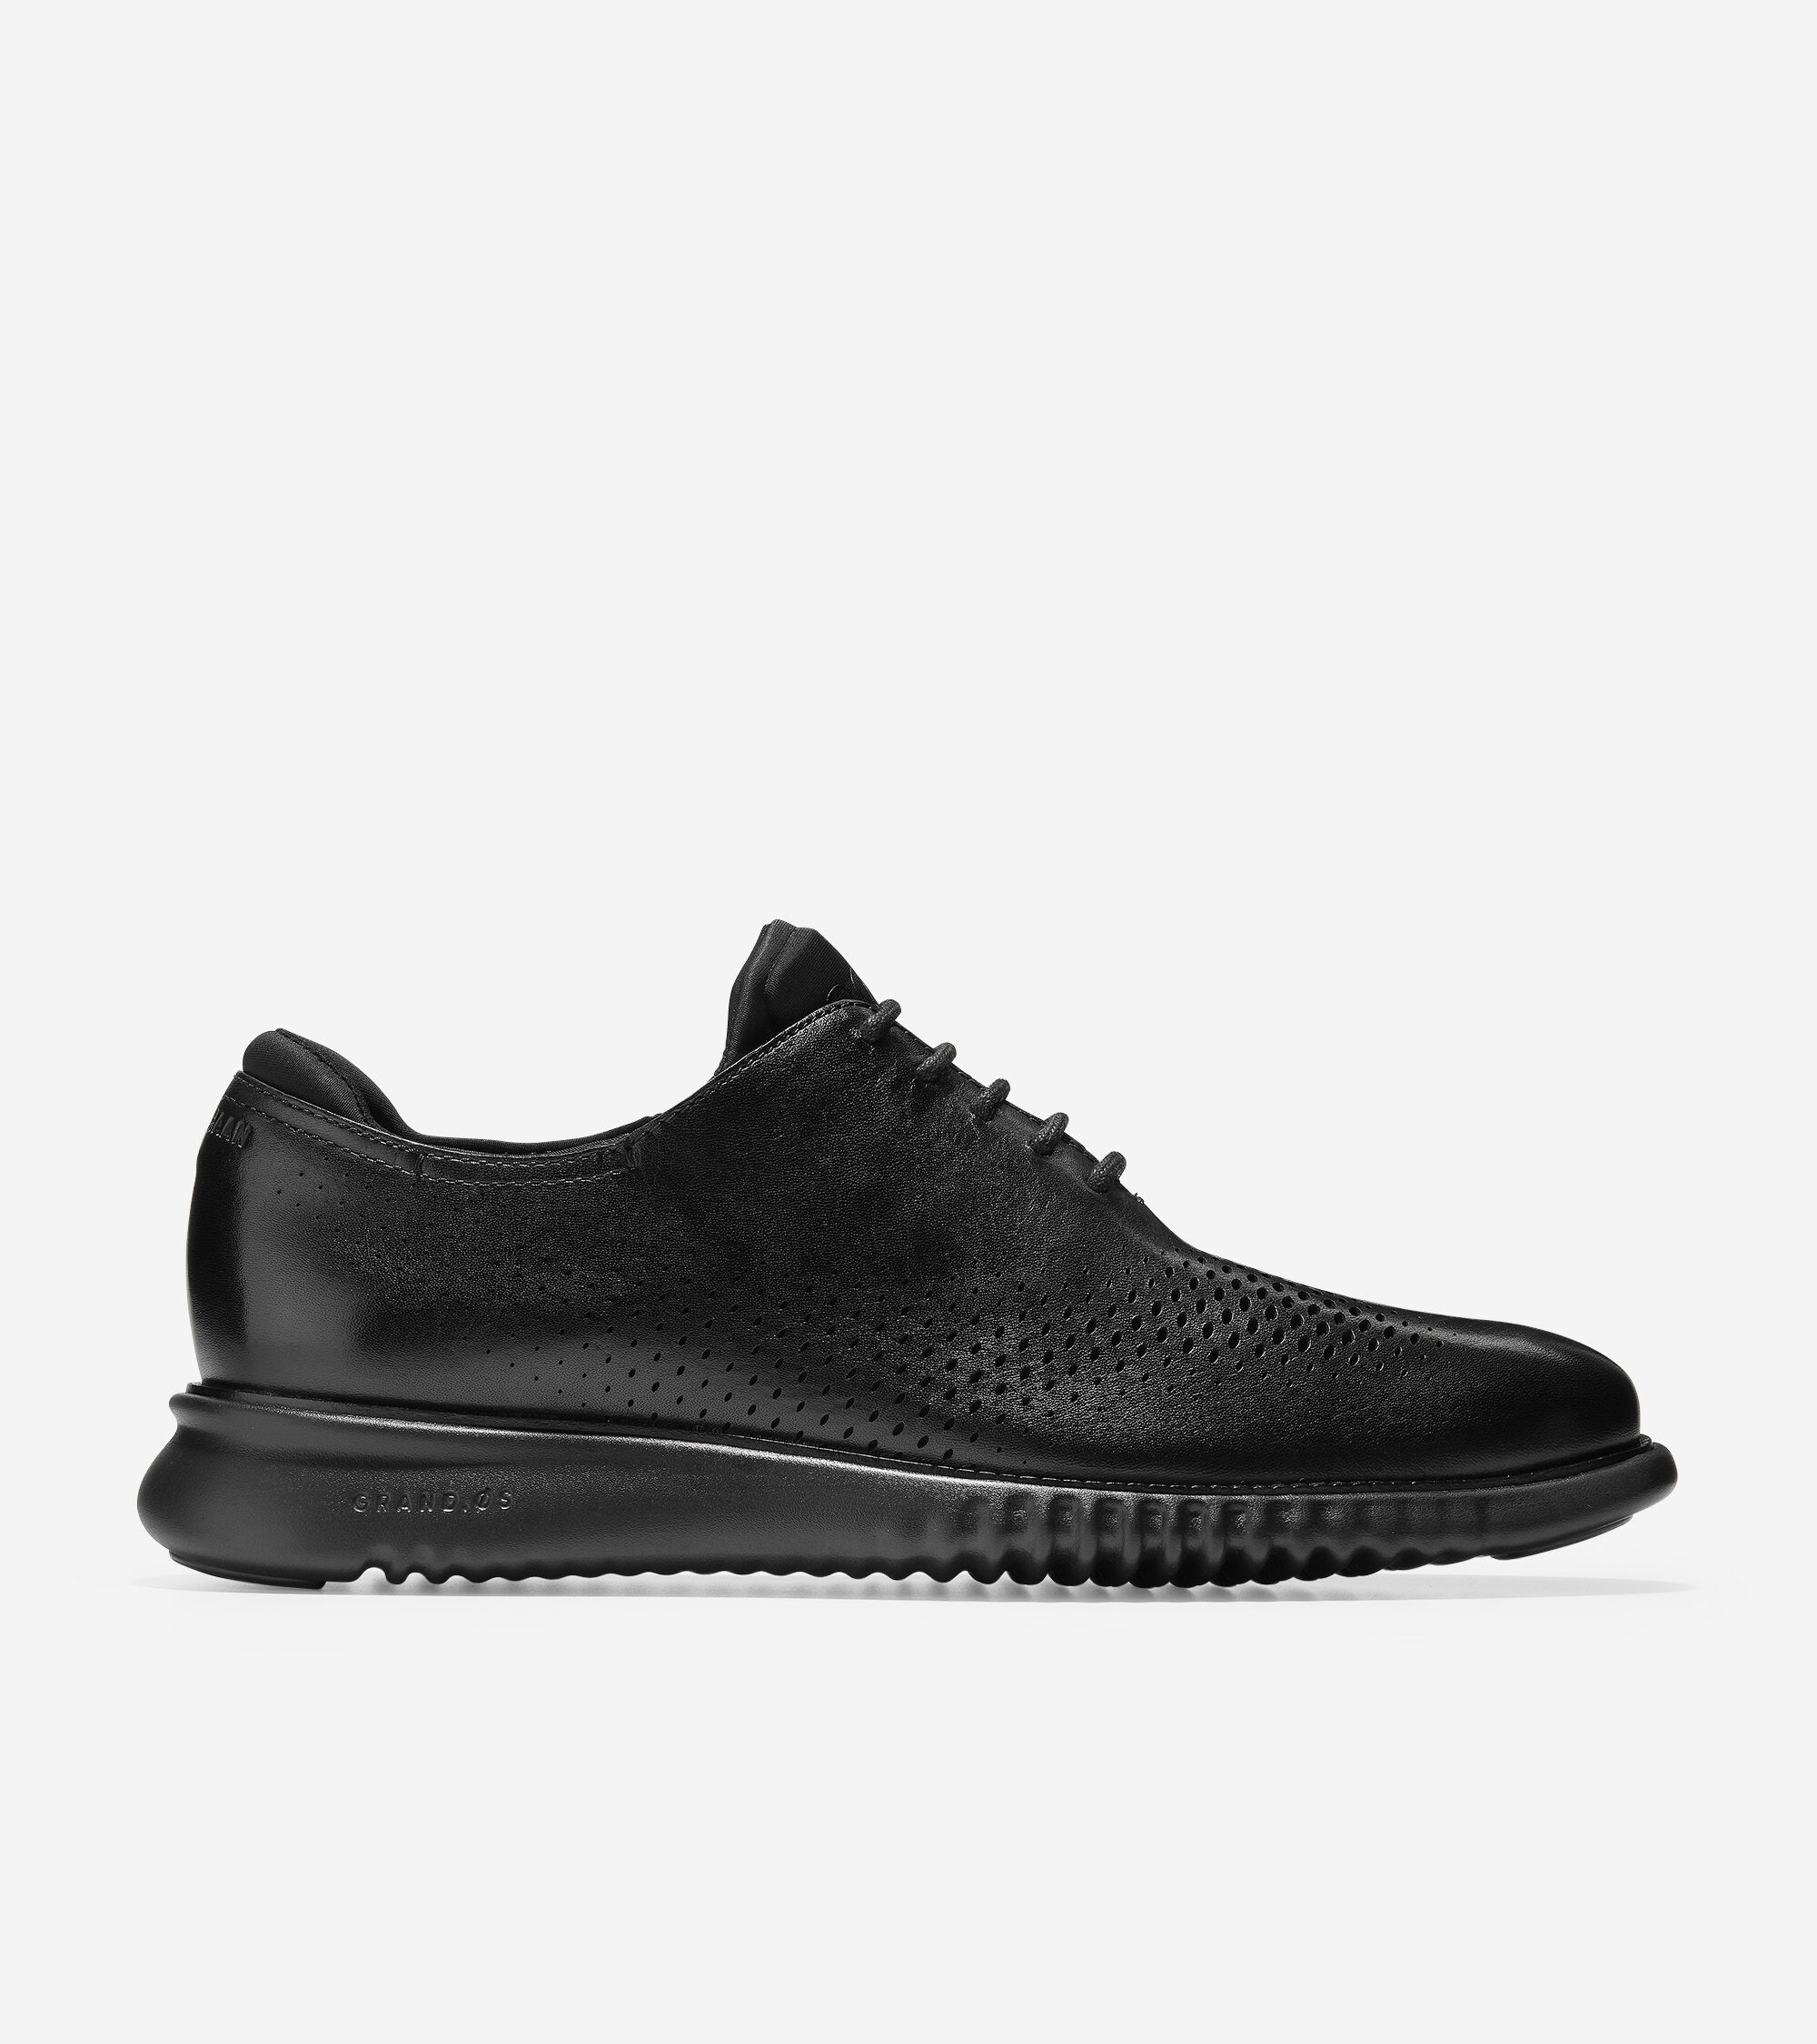 Cole Haan Men's Zerogrand Wingtip Oxford Shoes Black, Size 10.5 